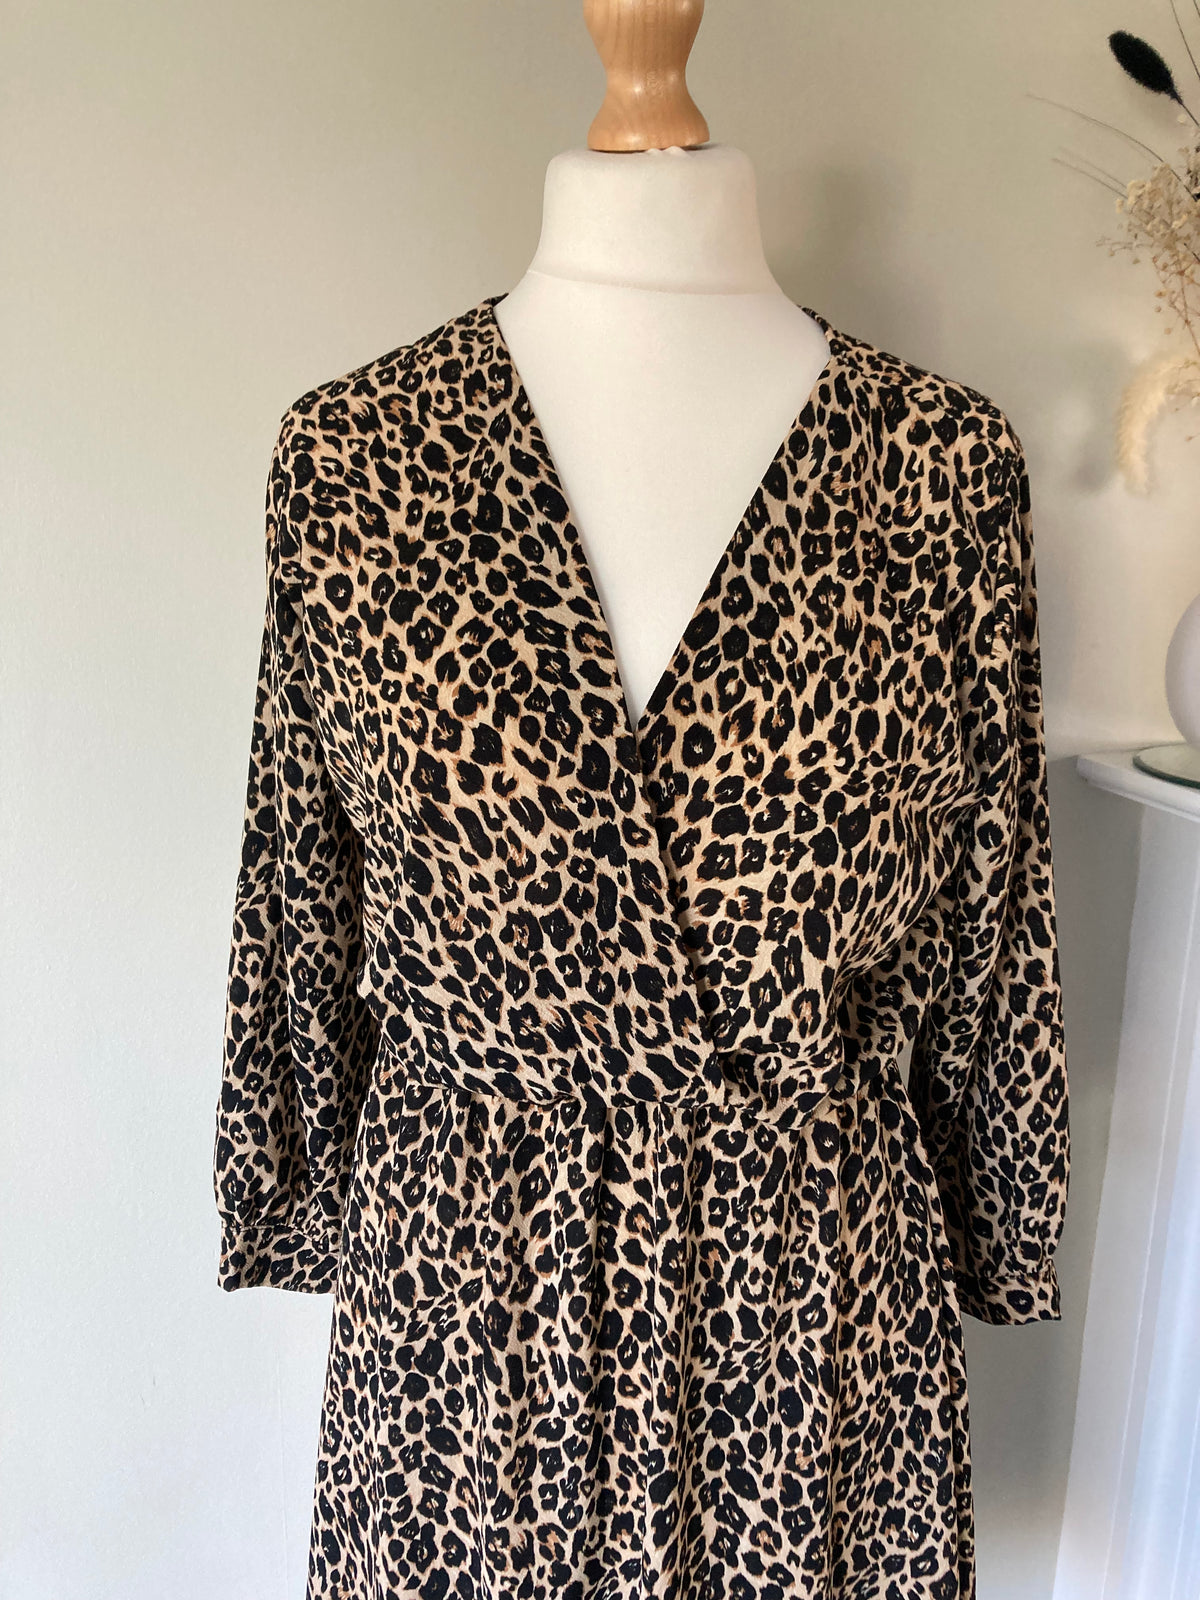 Leopard print wrap dress by Boohoo size 12